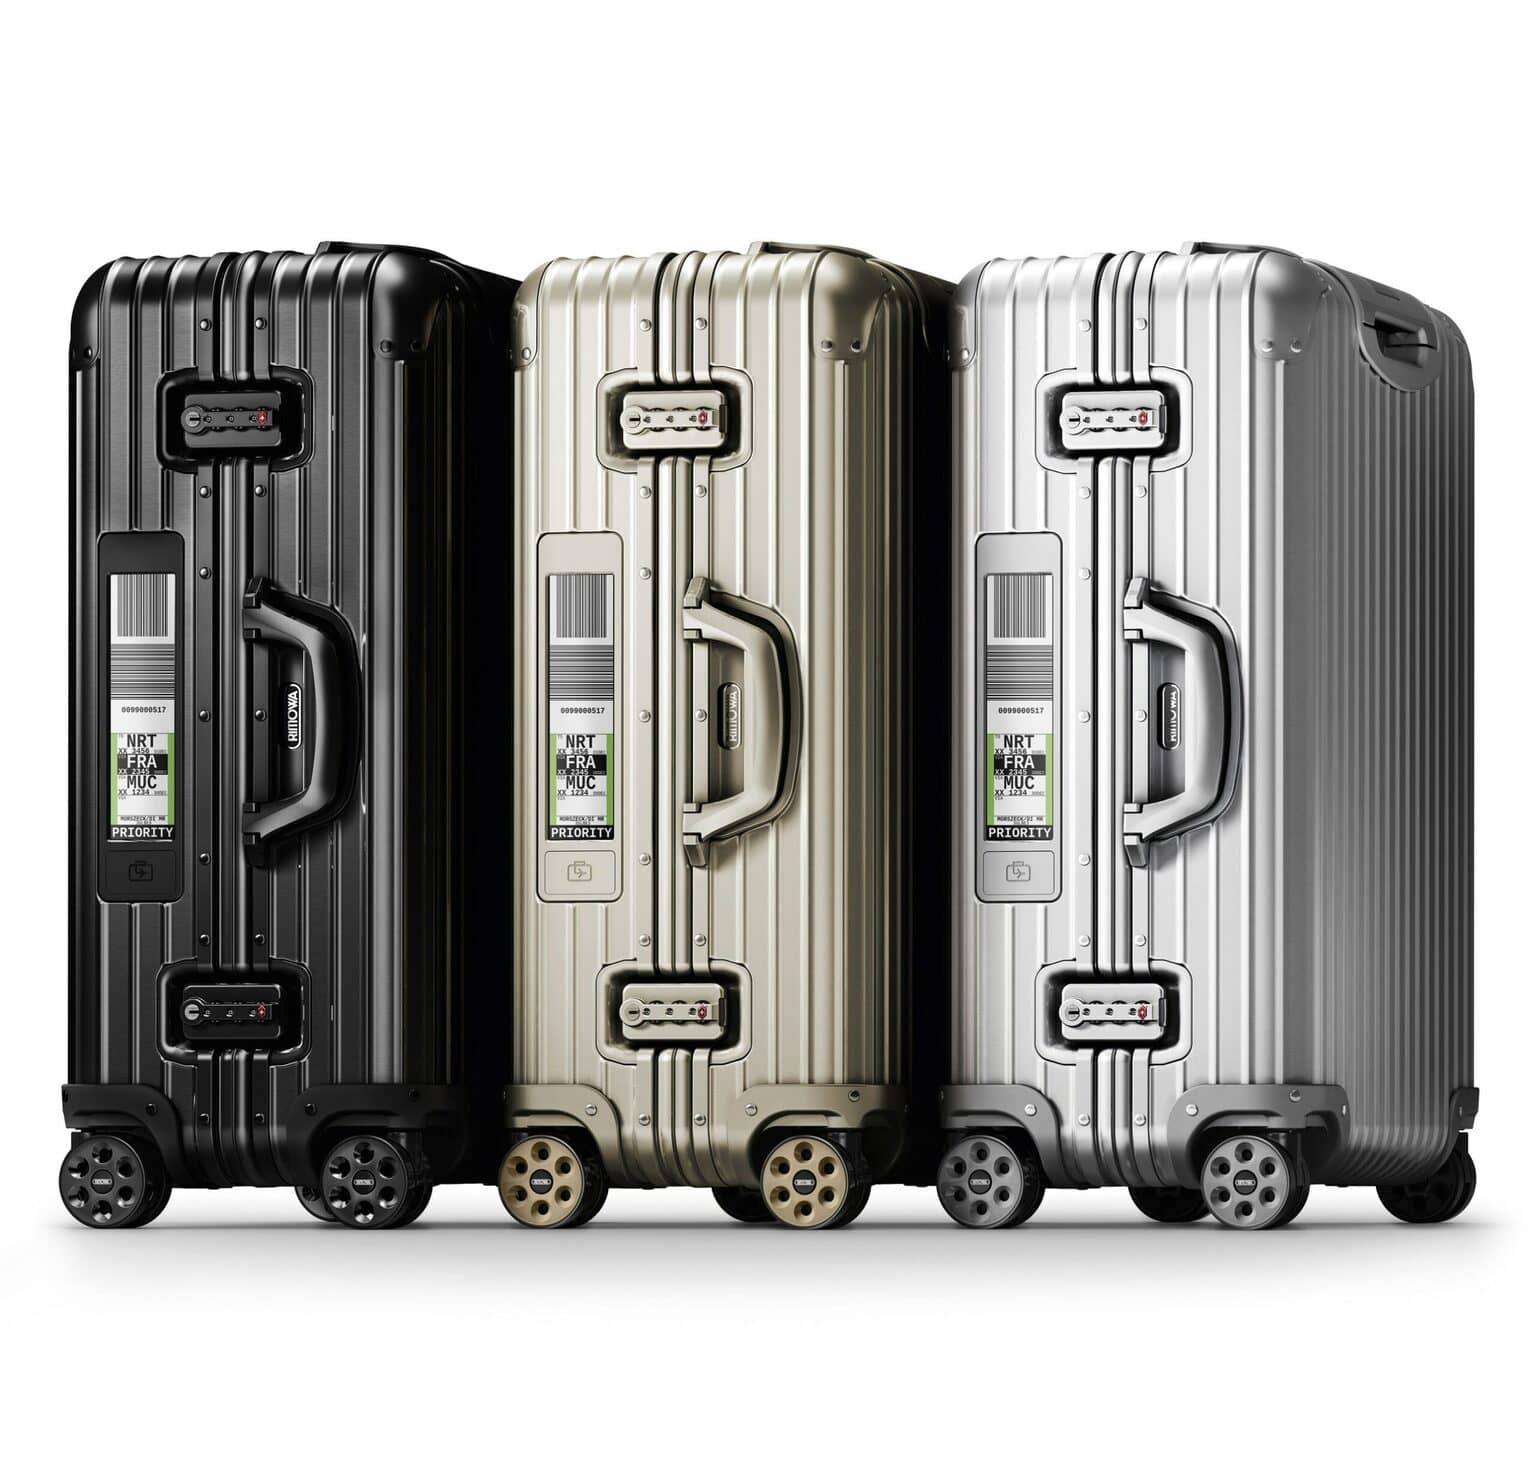 Rimowa three suitcase examples